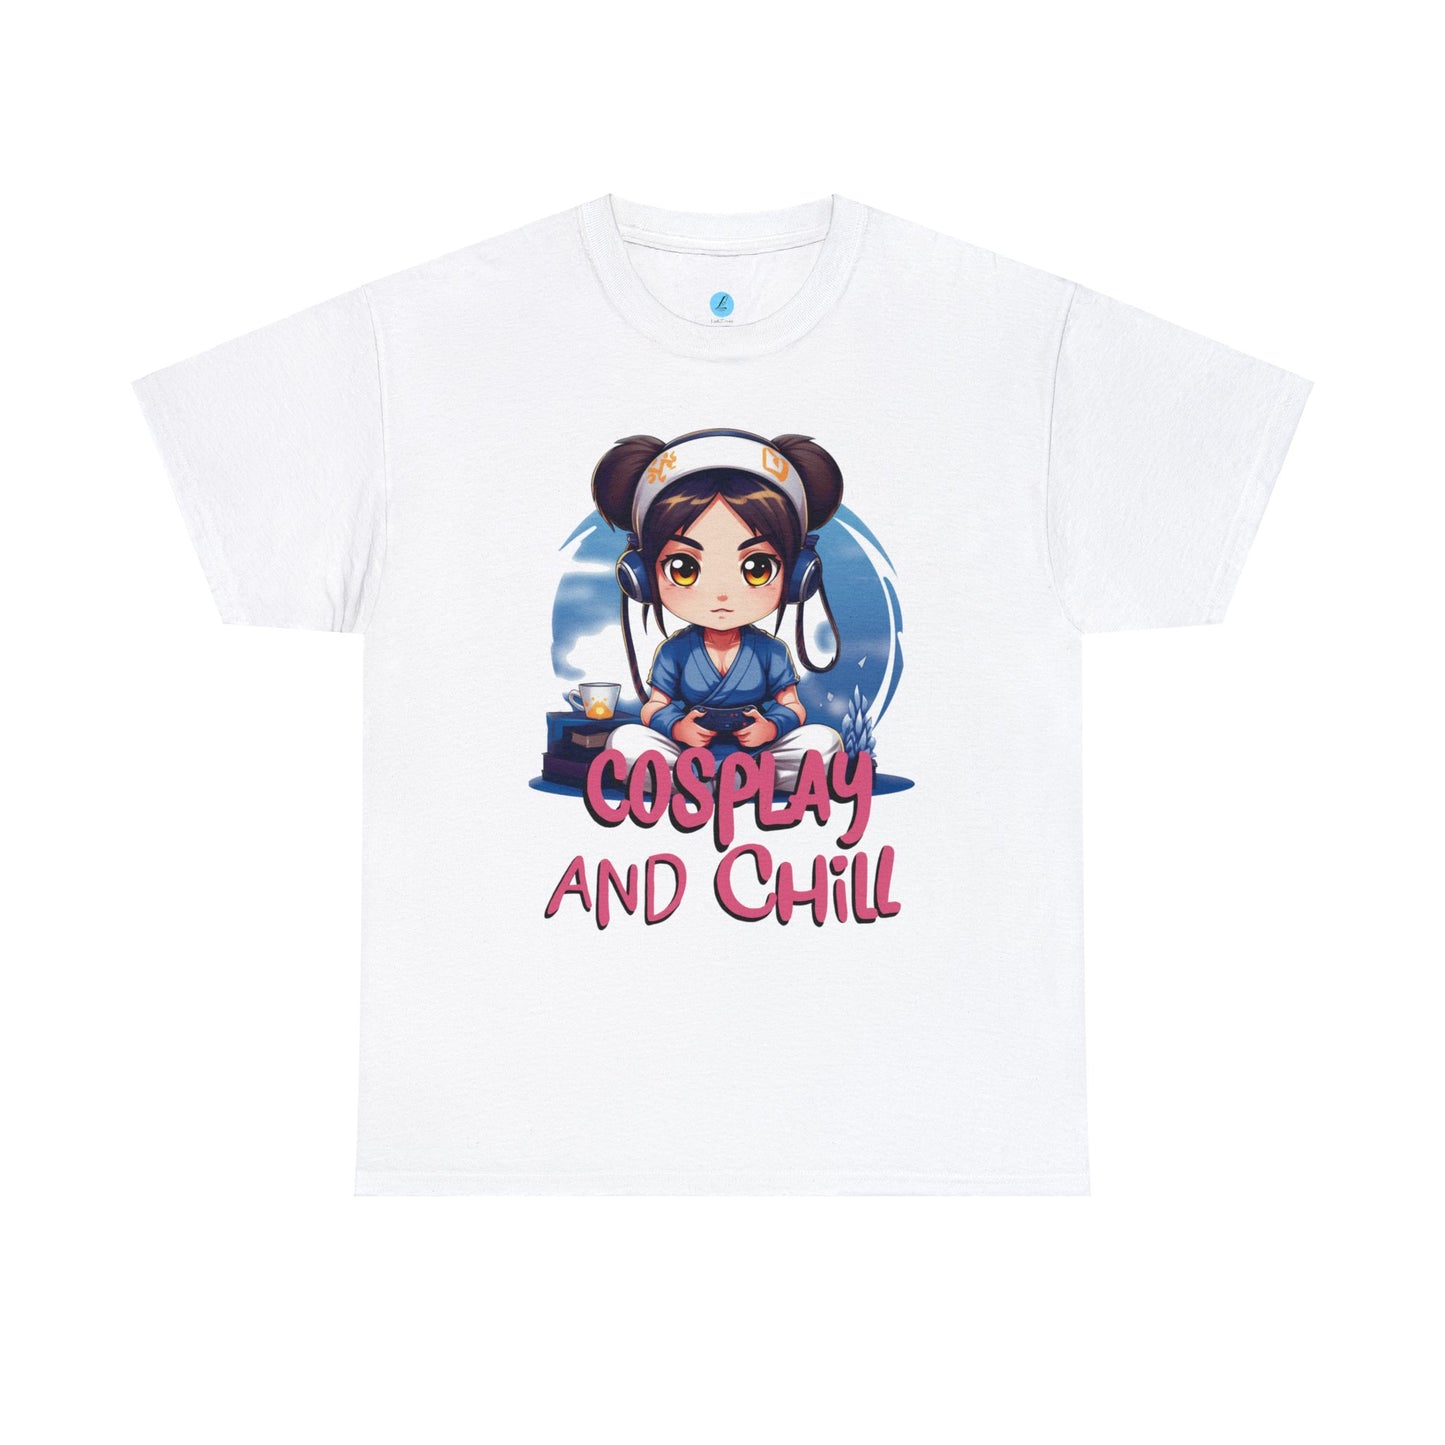 Cosplay and Chill, Unisex T-shirt, Gamergirl, Chibi, Kawaii, Cute